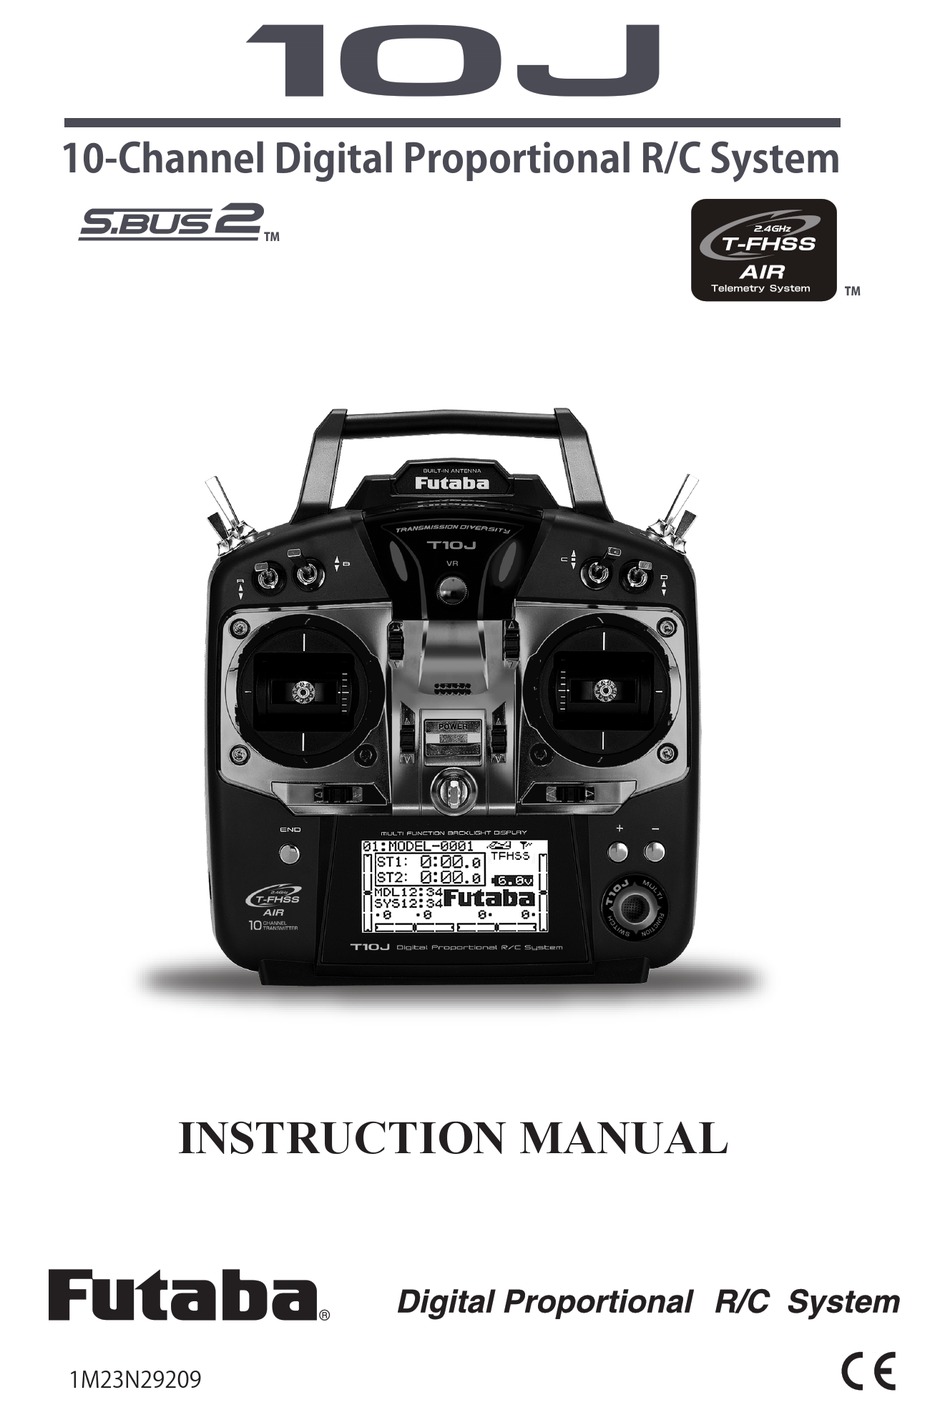 FUTABA 10J INSTRUCTION MANUAL Pdf Download | ManualsLib